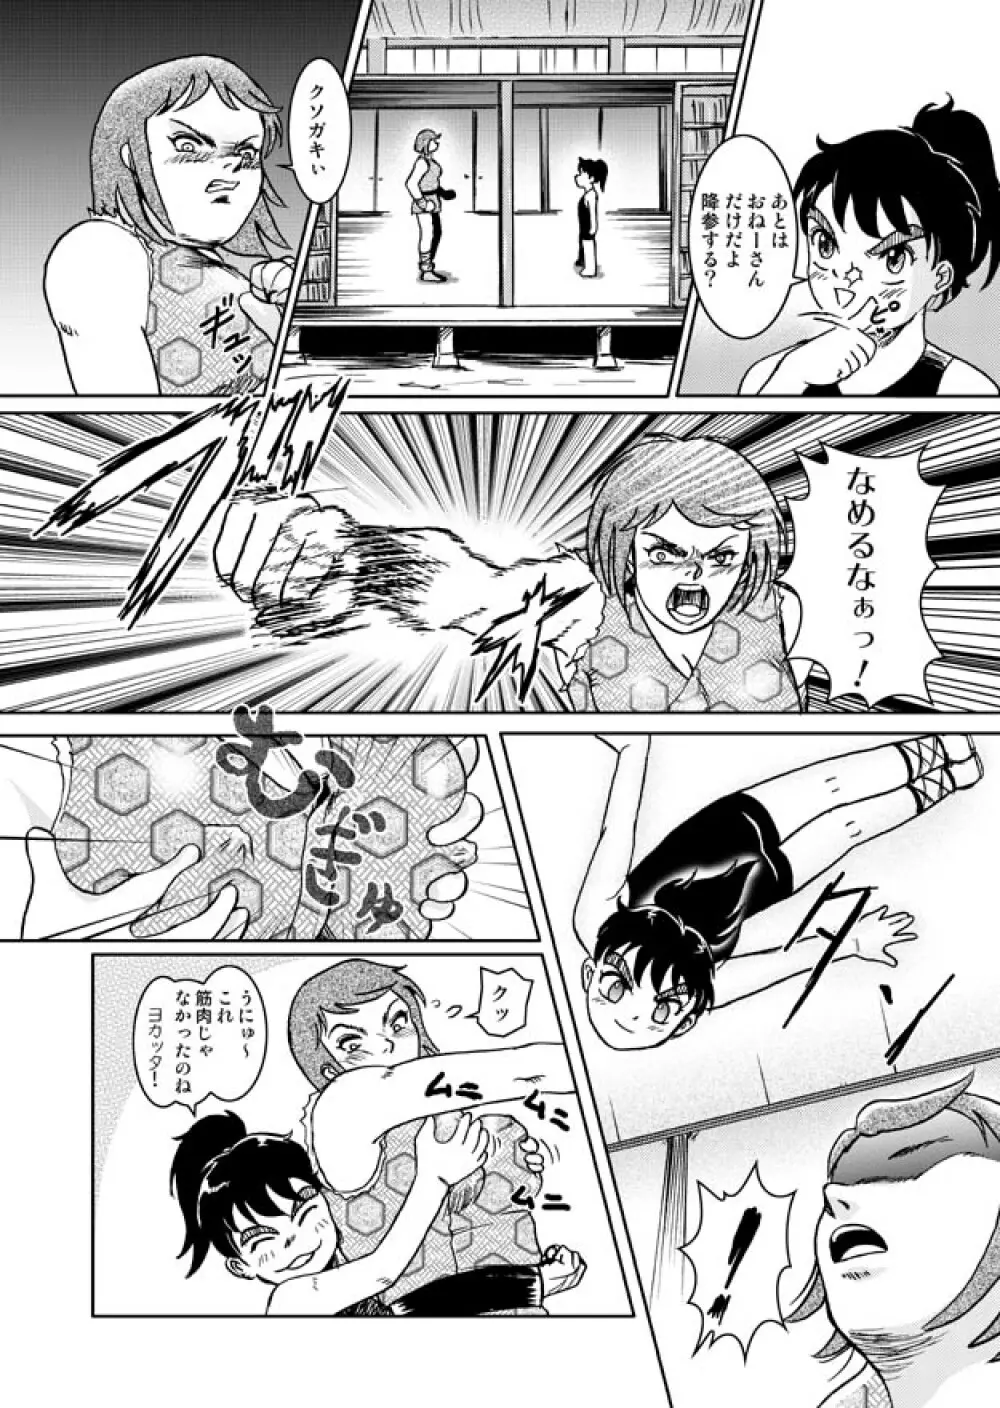 Same-themed manga about kid fighting female ninjas from japanese imageboard. 11ページ